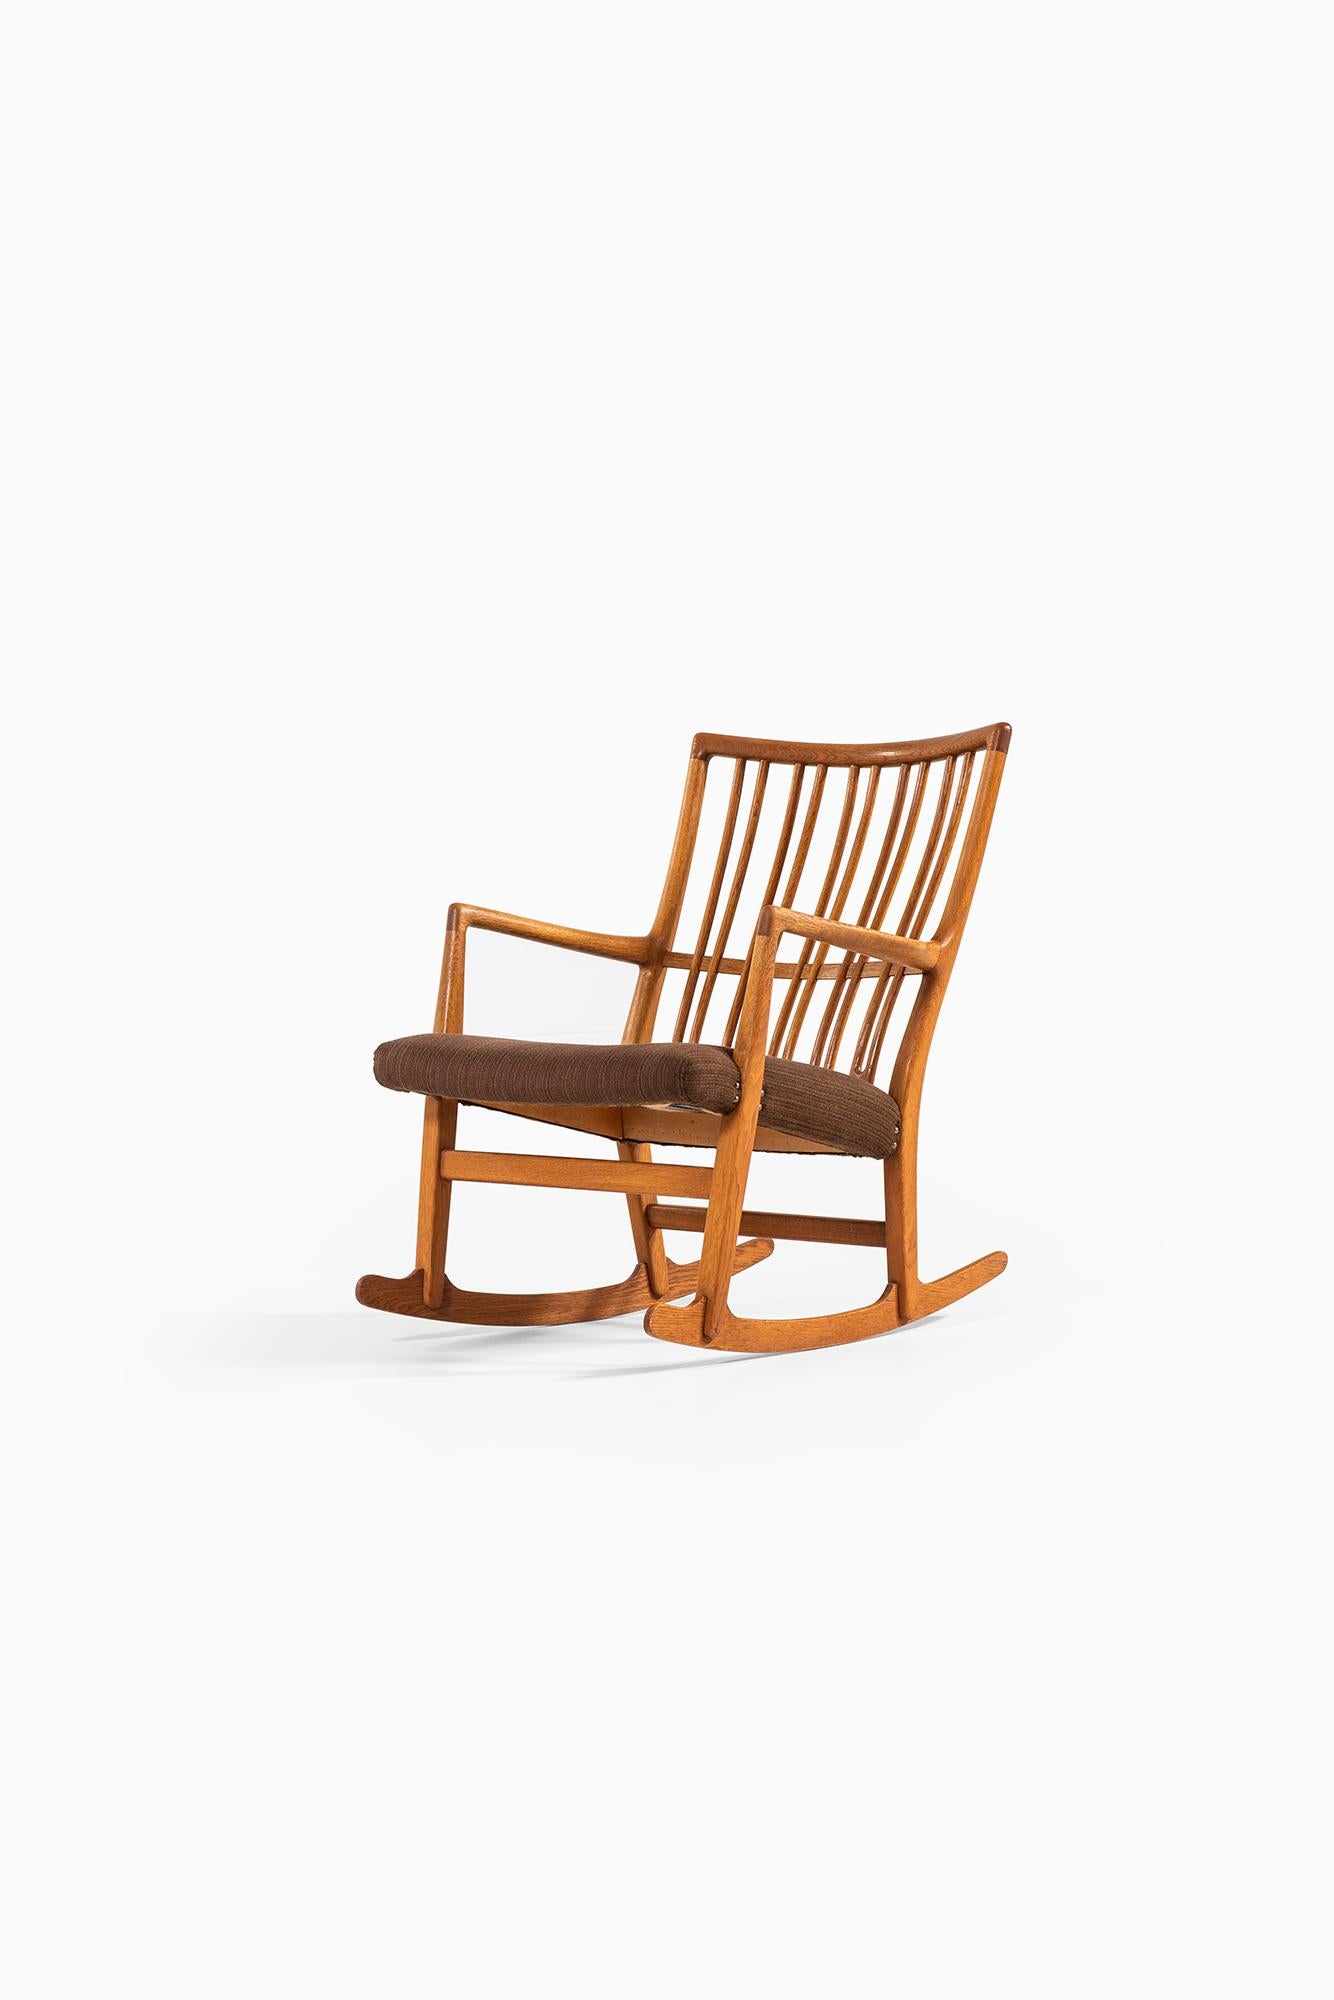 Rare rocking chair model ML-33 designed by Hans Wegner. Produced by Mikael Laursen in Denmark.